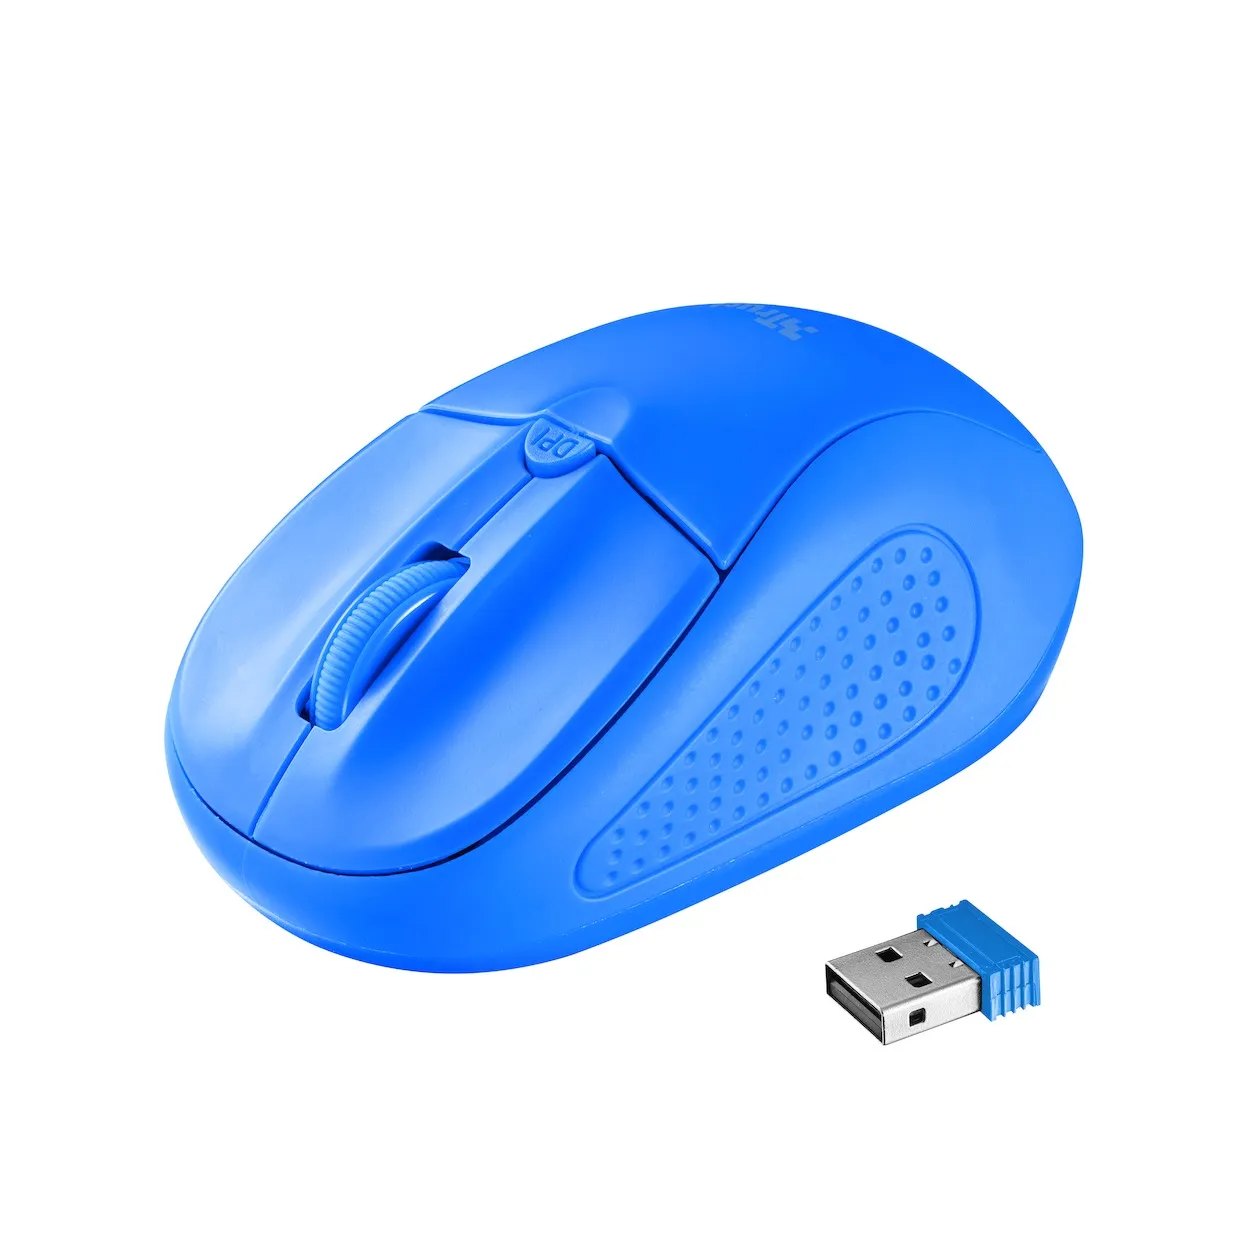 Trust Primo Wireless Mouse Blauw